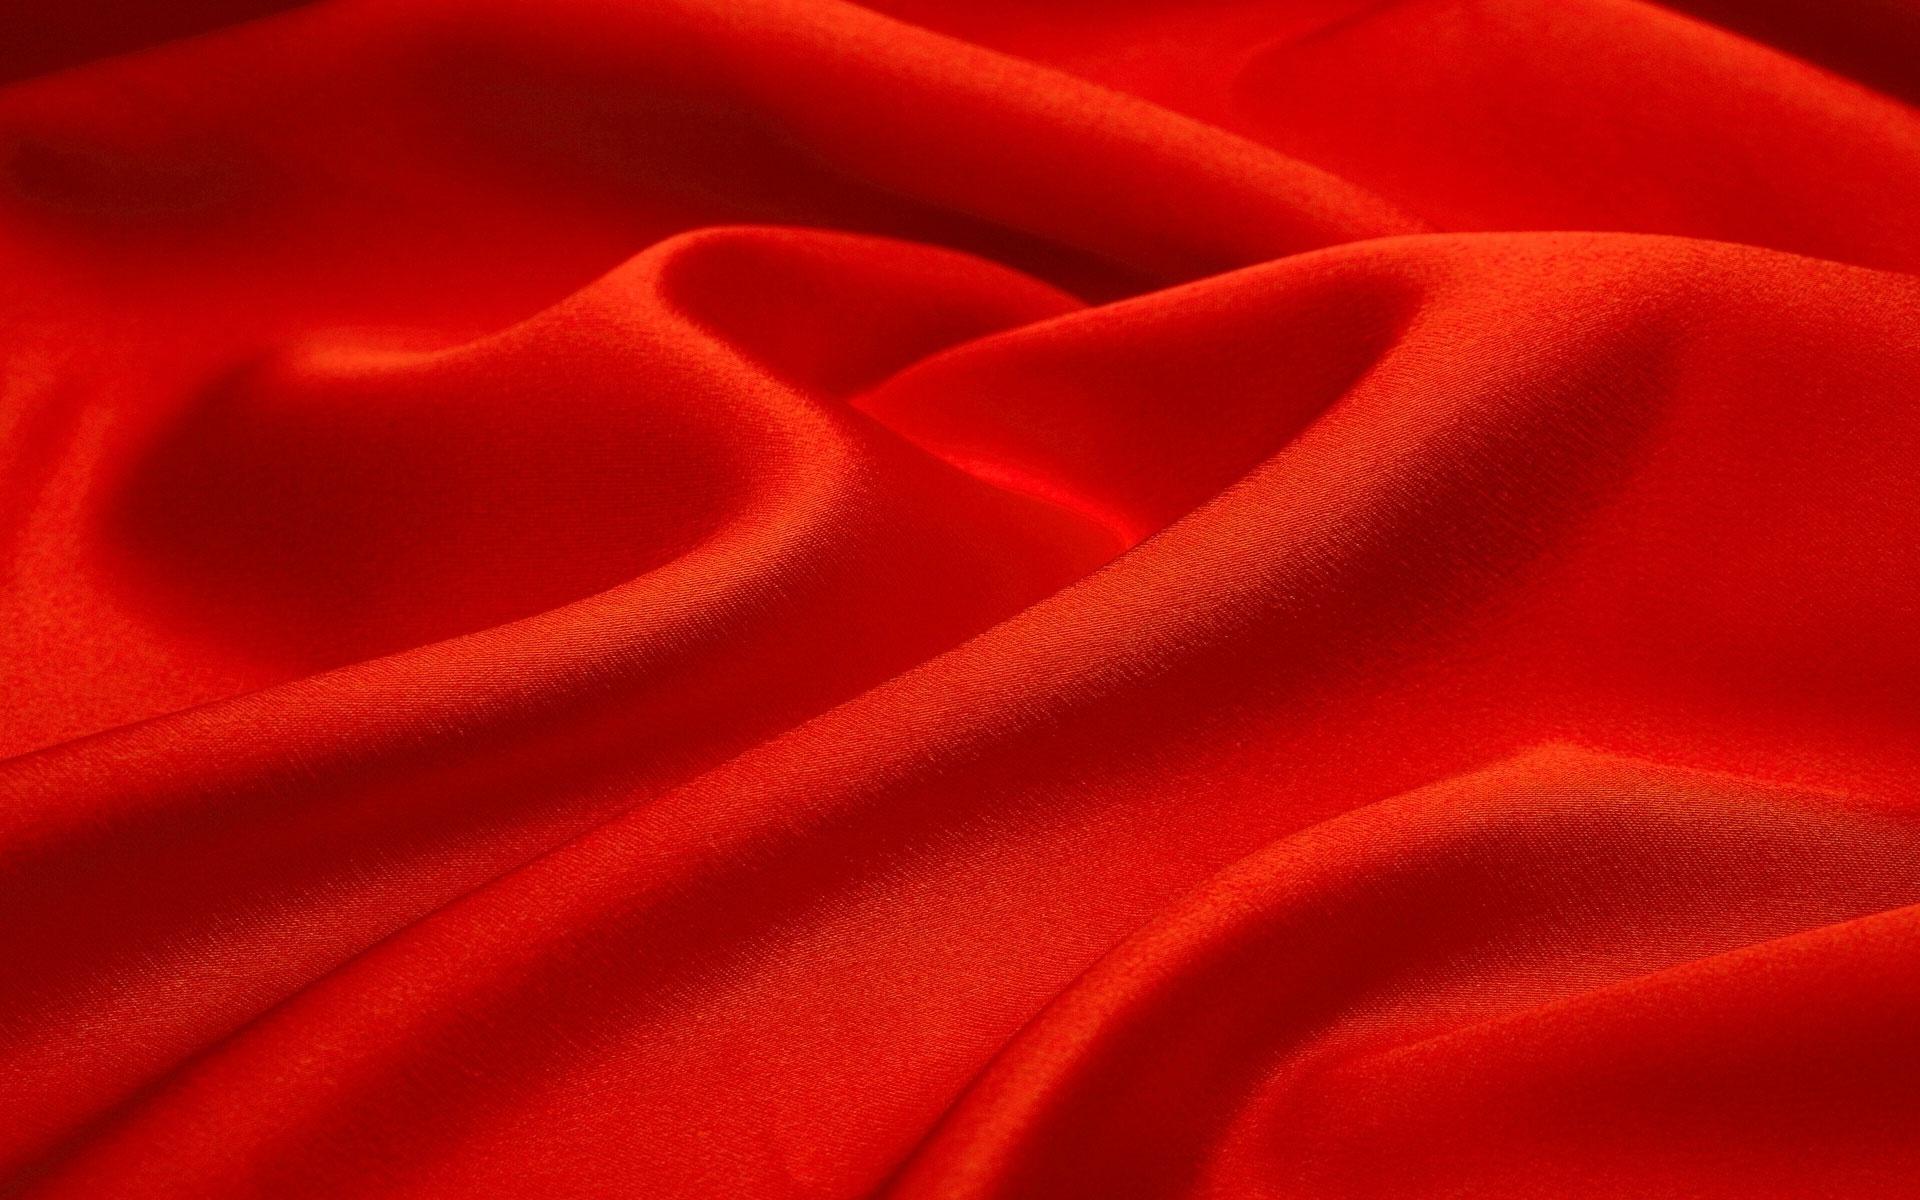 Red Silk Wallpaper 53919 1920x1200px